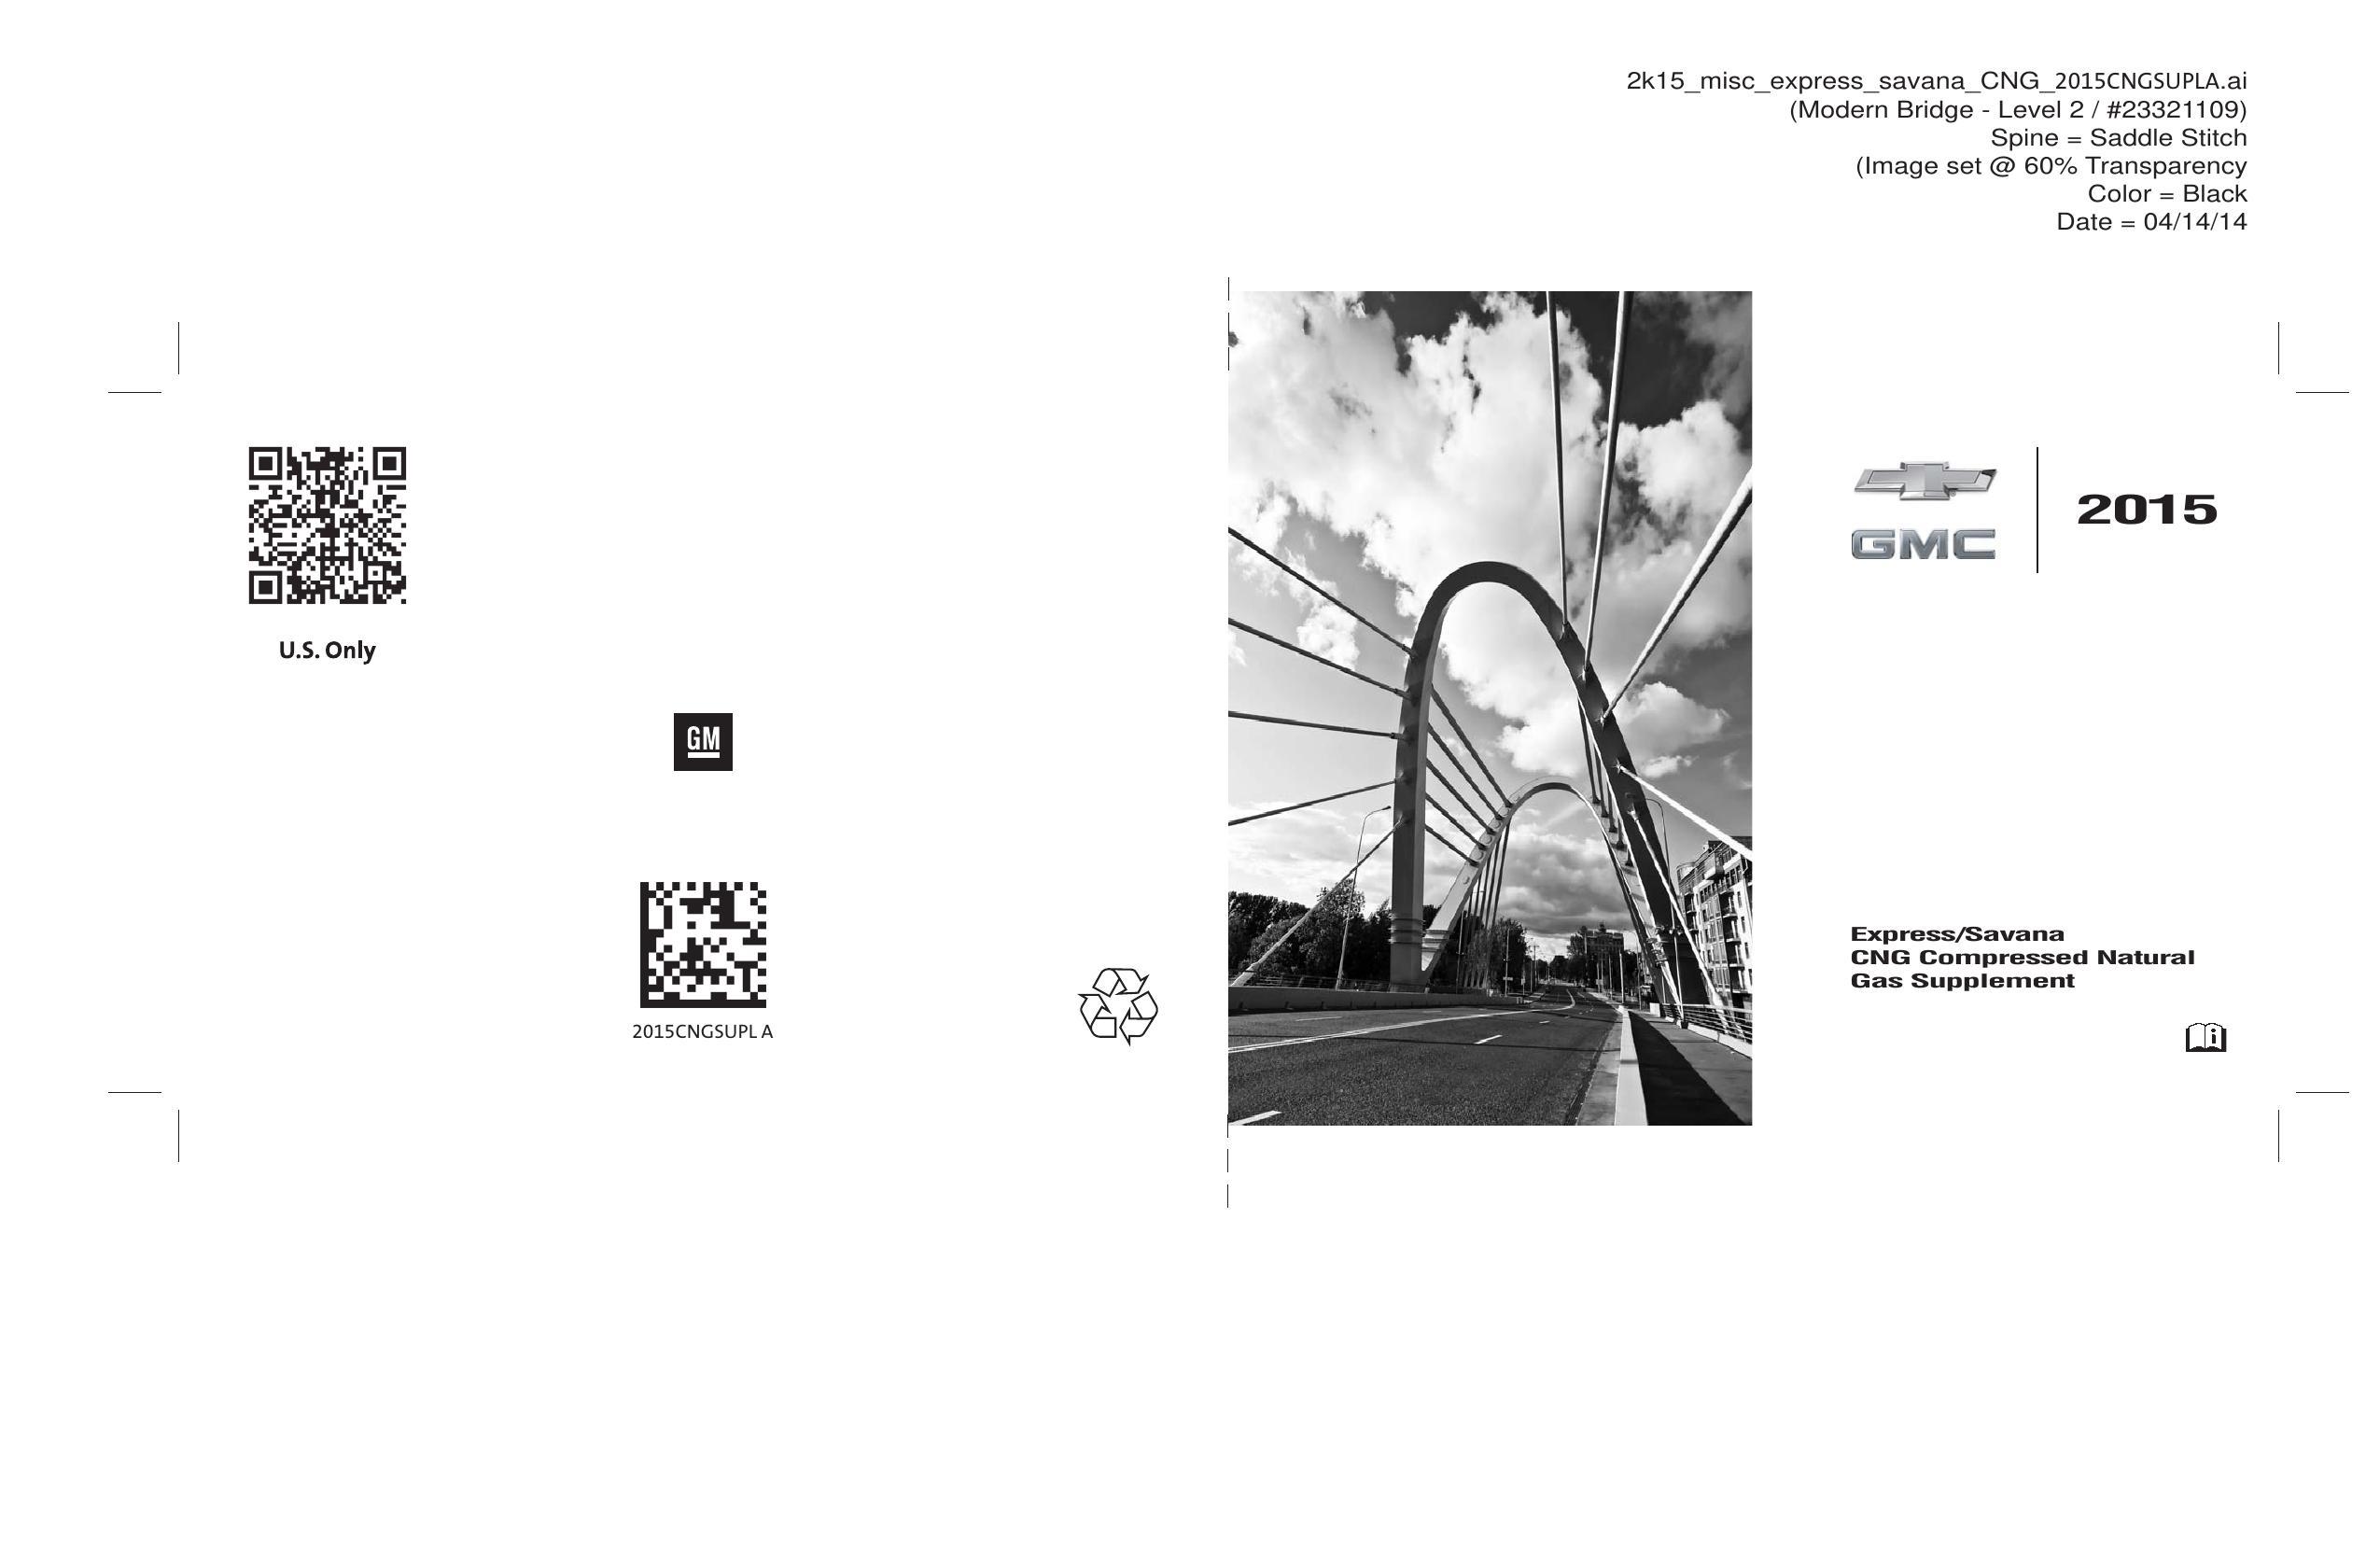 2015-expresssavana-cng-compressed-natural-gas-supplement.pdf